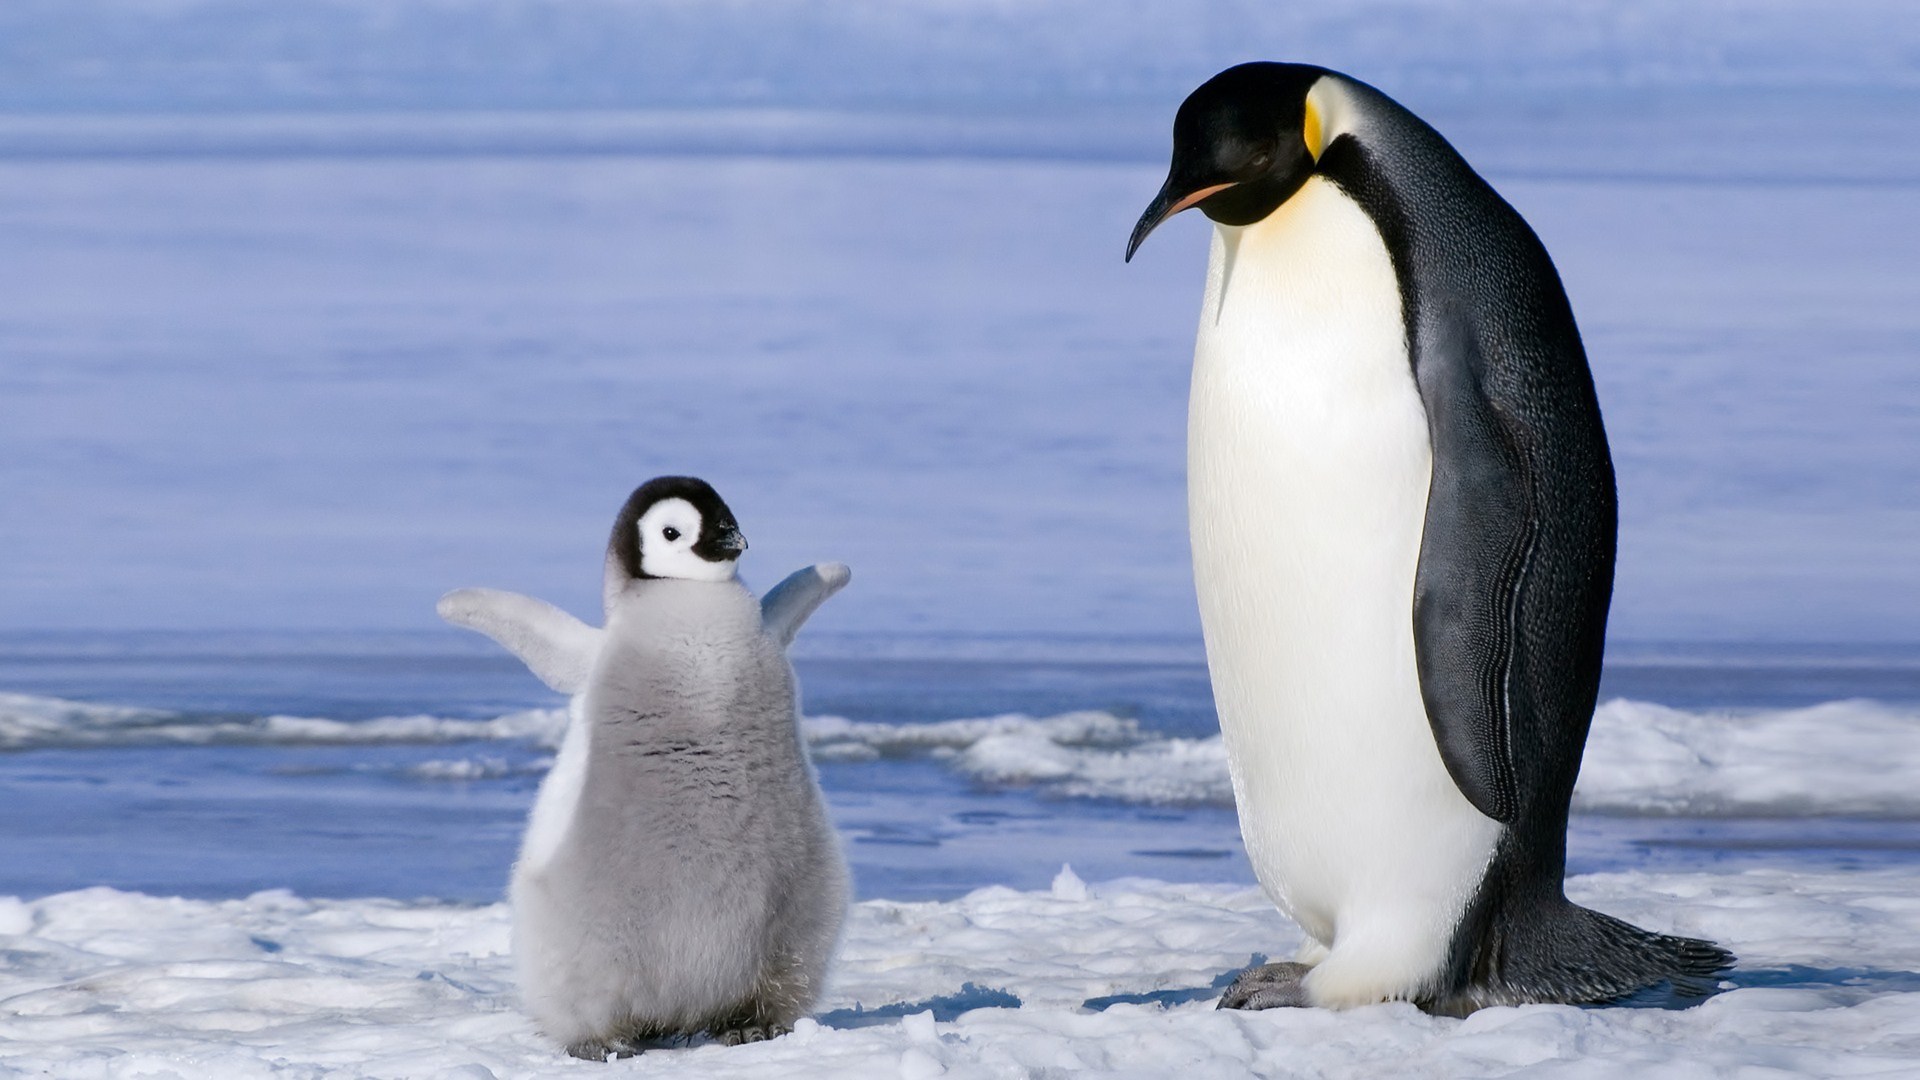 320335 descargar imagen animales, pingüino, ave, aves: fondos de pantalla y protectores de pantalla gratis